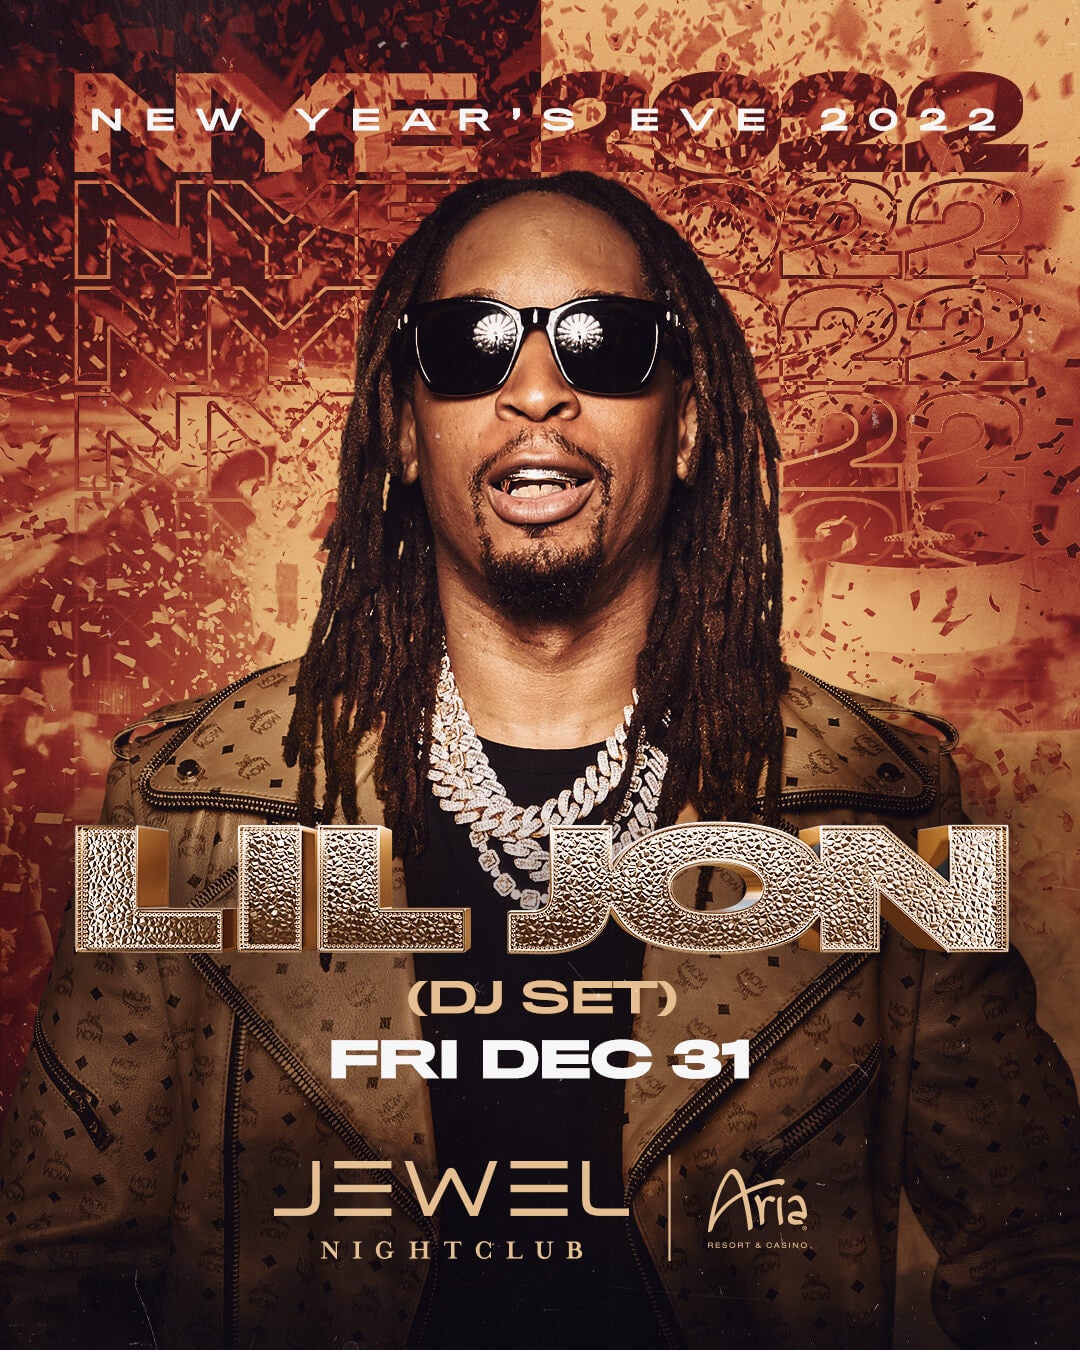 12/31/21 - Lil Jon (DJ Set) New Year's Eve - JEWEL Nightclub - Las Vegas -  Tao Group Hospitality